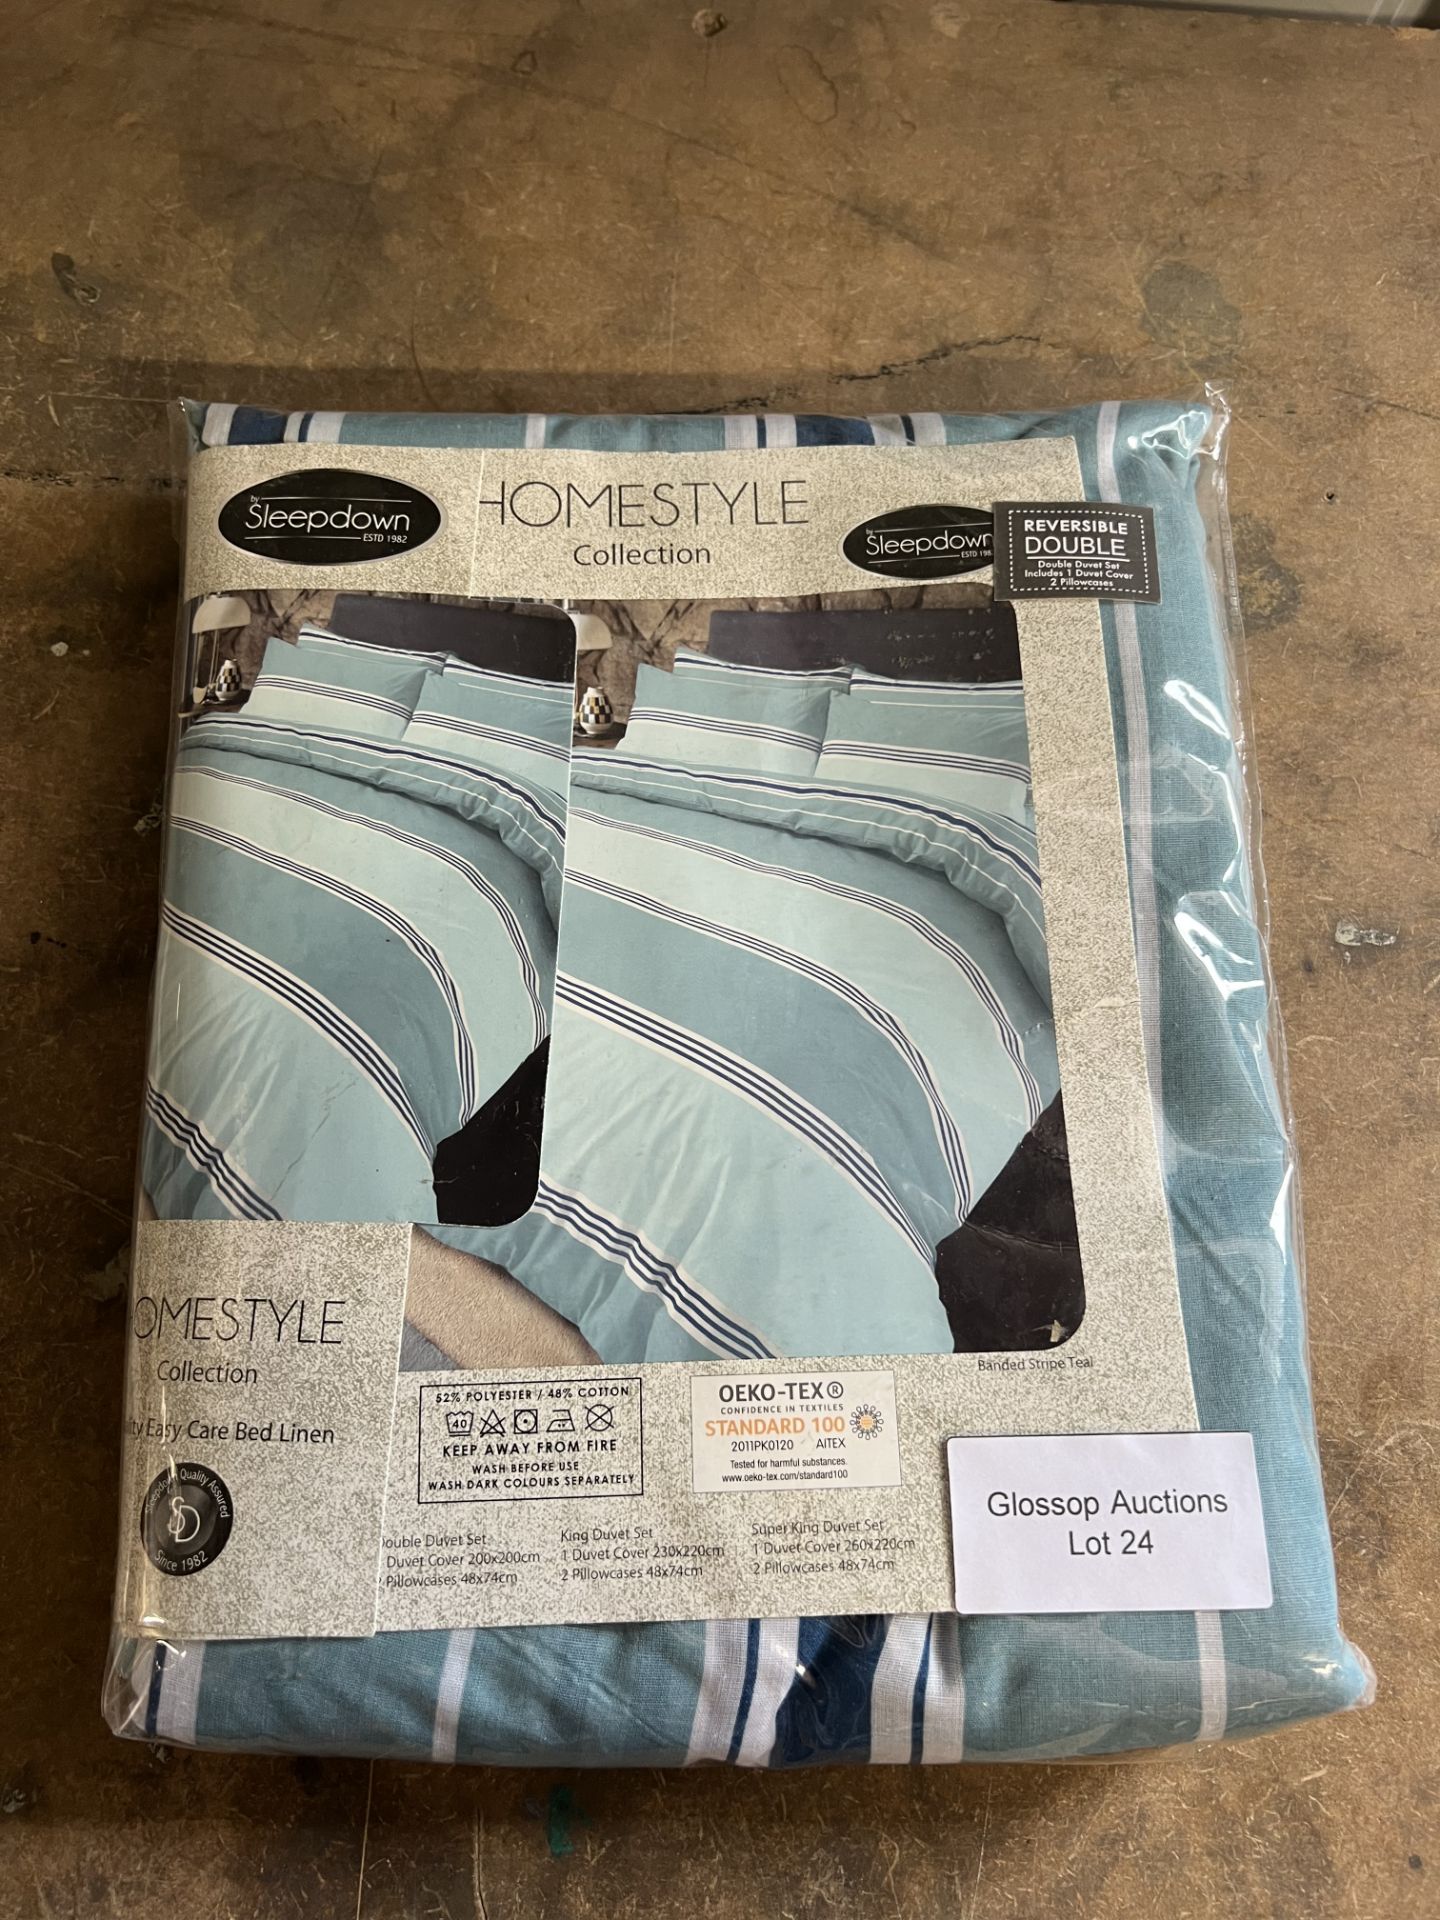 Sleepdown Banded Stripe Teal Reversible Soft Duvet Bedding Set, Double. RRP £24.99 - GRADE U - Image 2 of 2